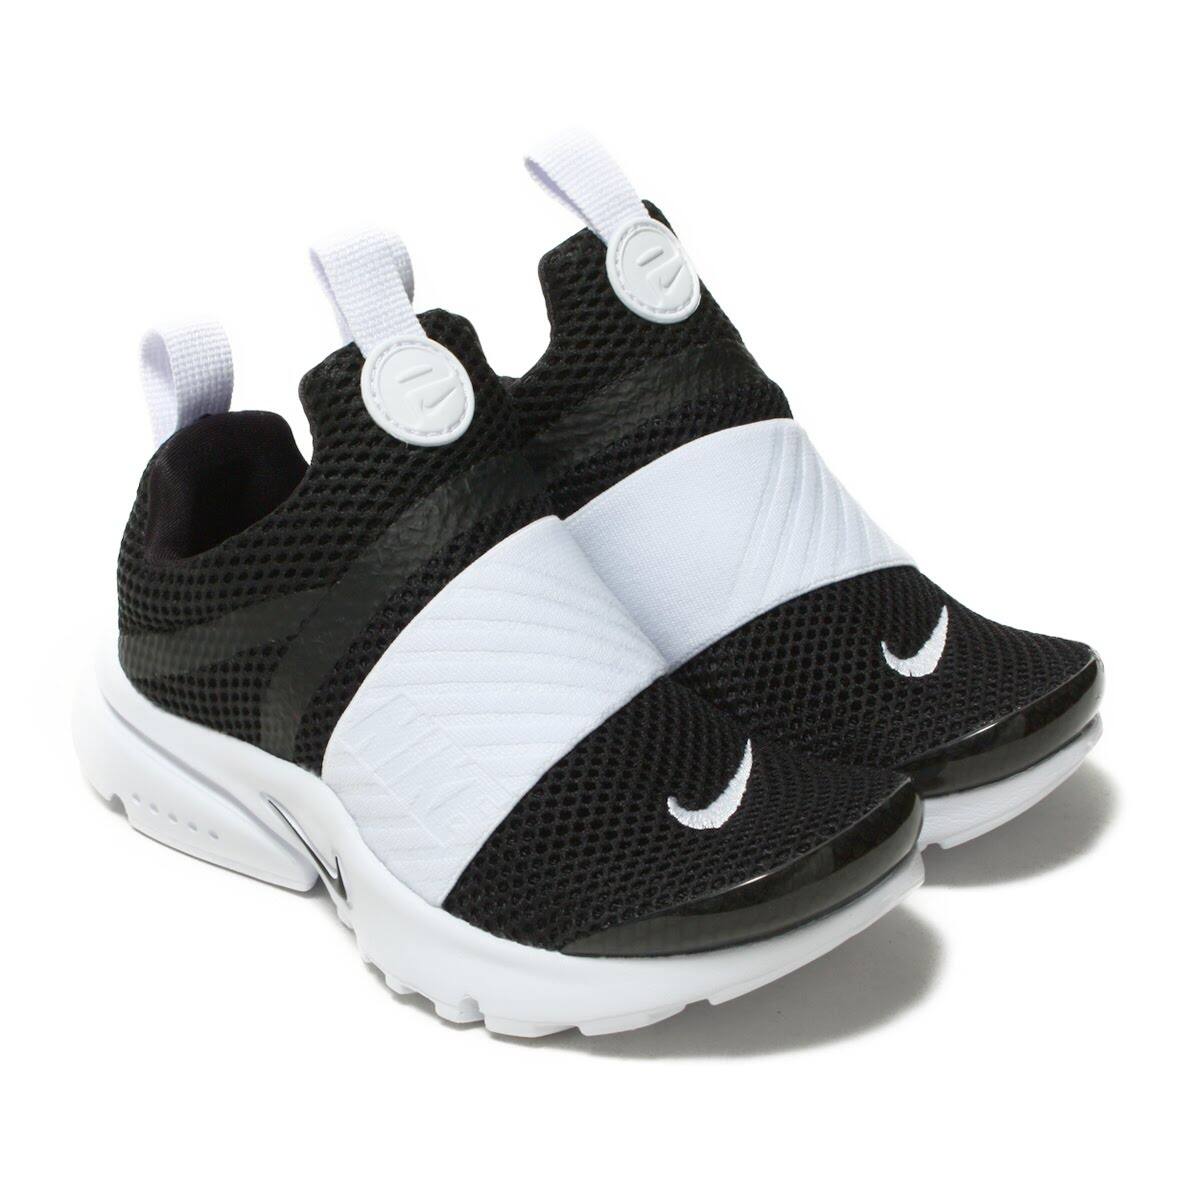 Nike Presto Extreme Ps Black Black White 18sp I